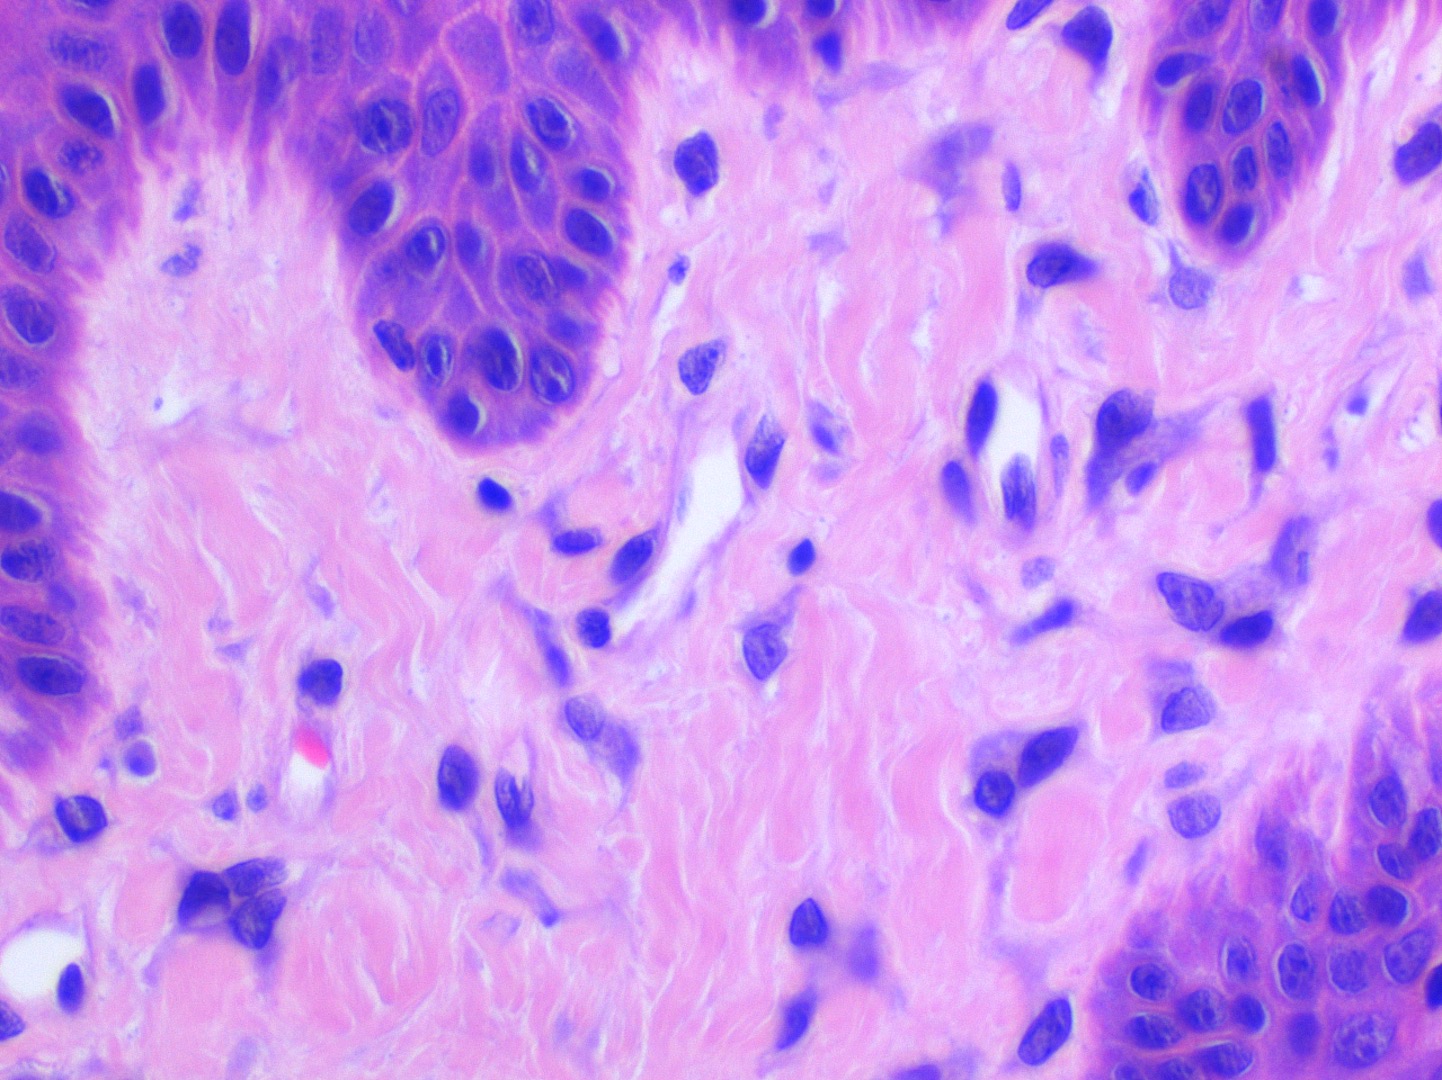 Multinucleated fibroblasts